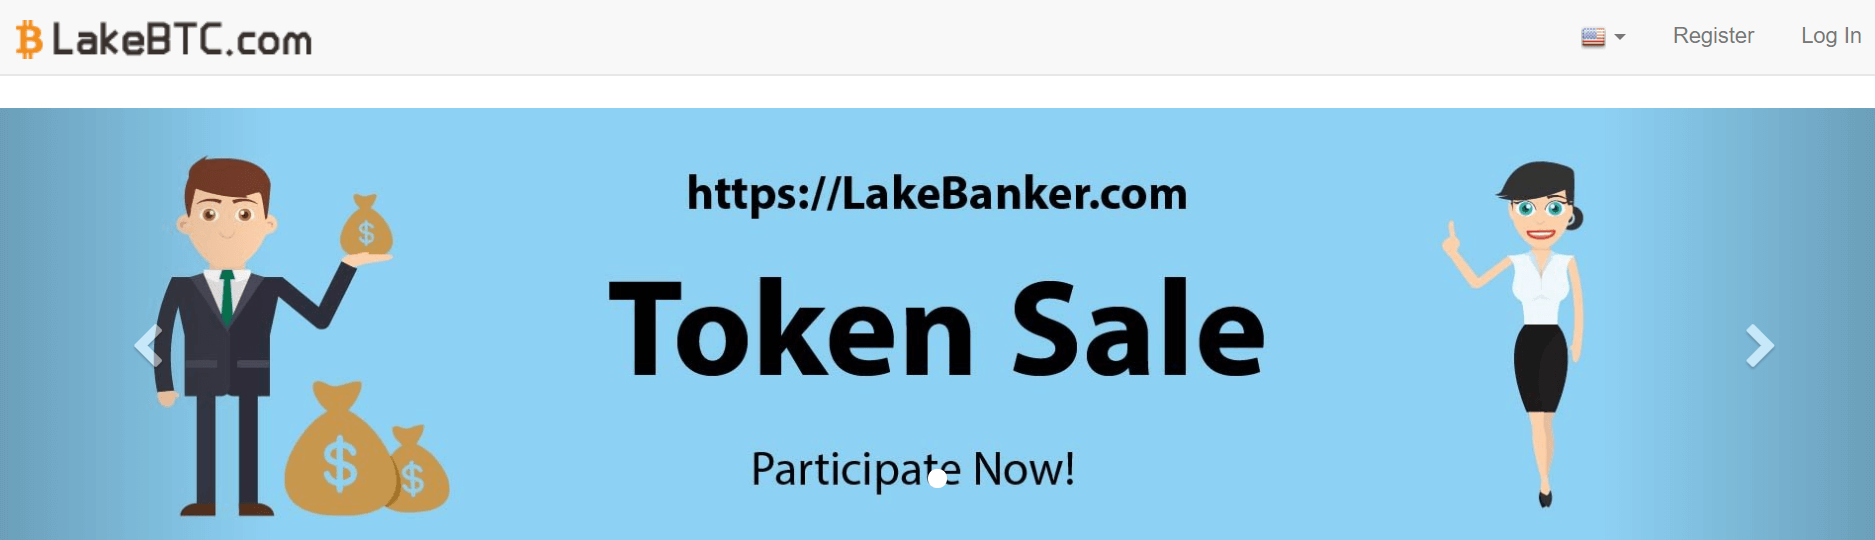 Get bitcoins on LakeBTC exchange